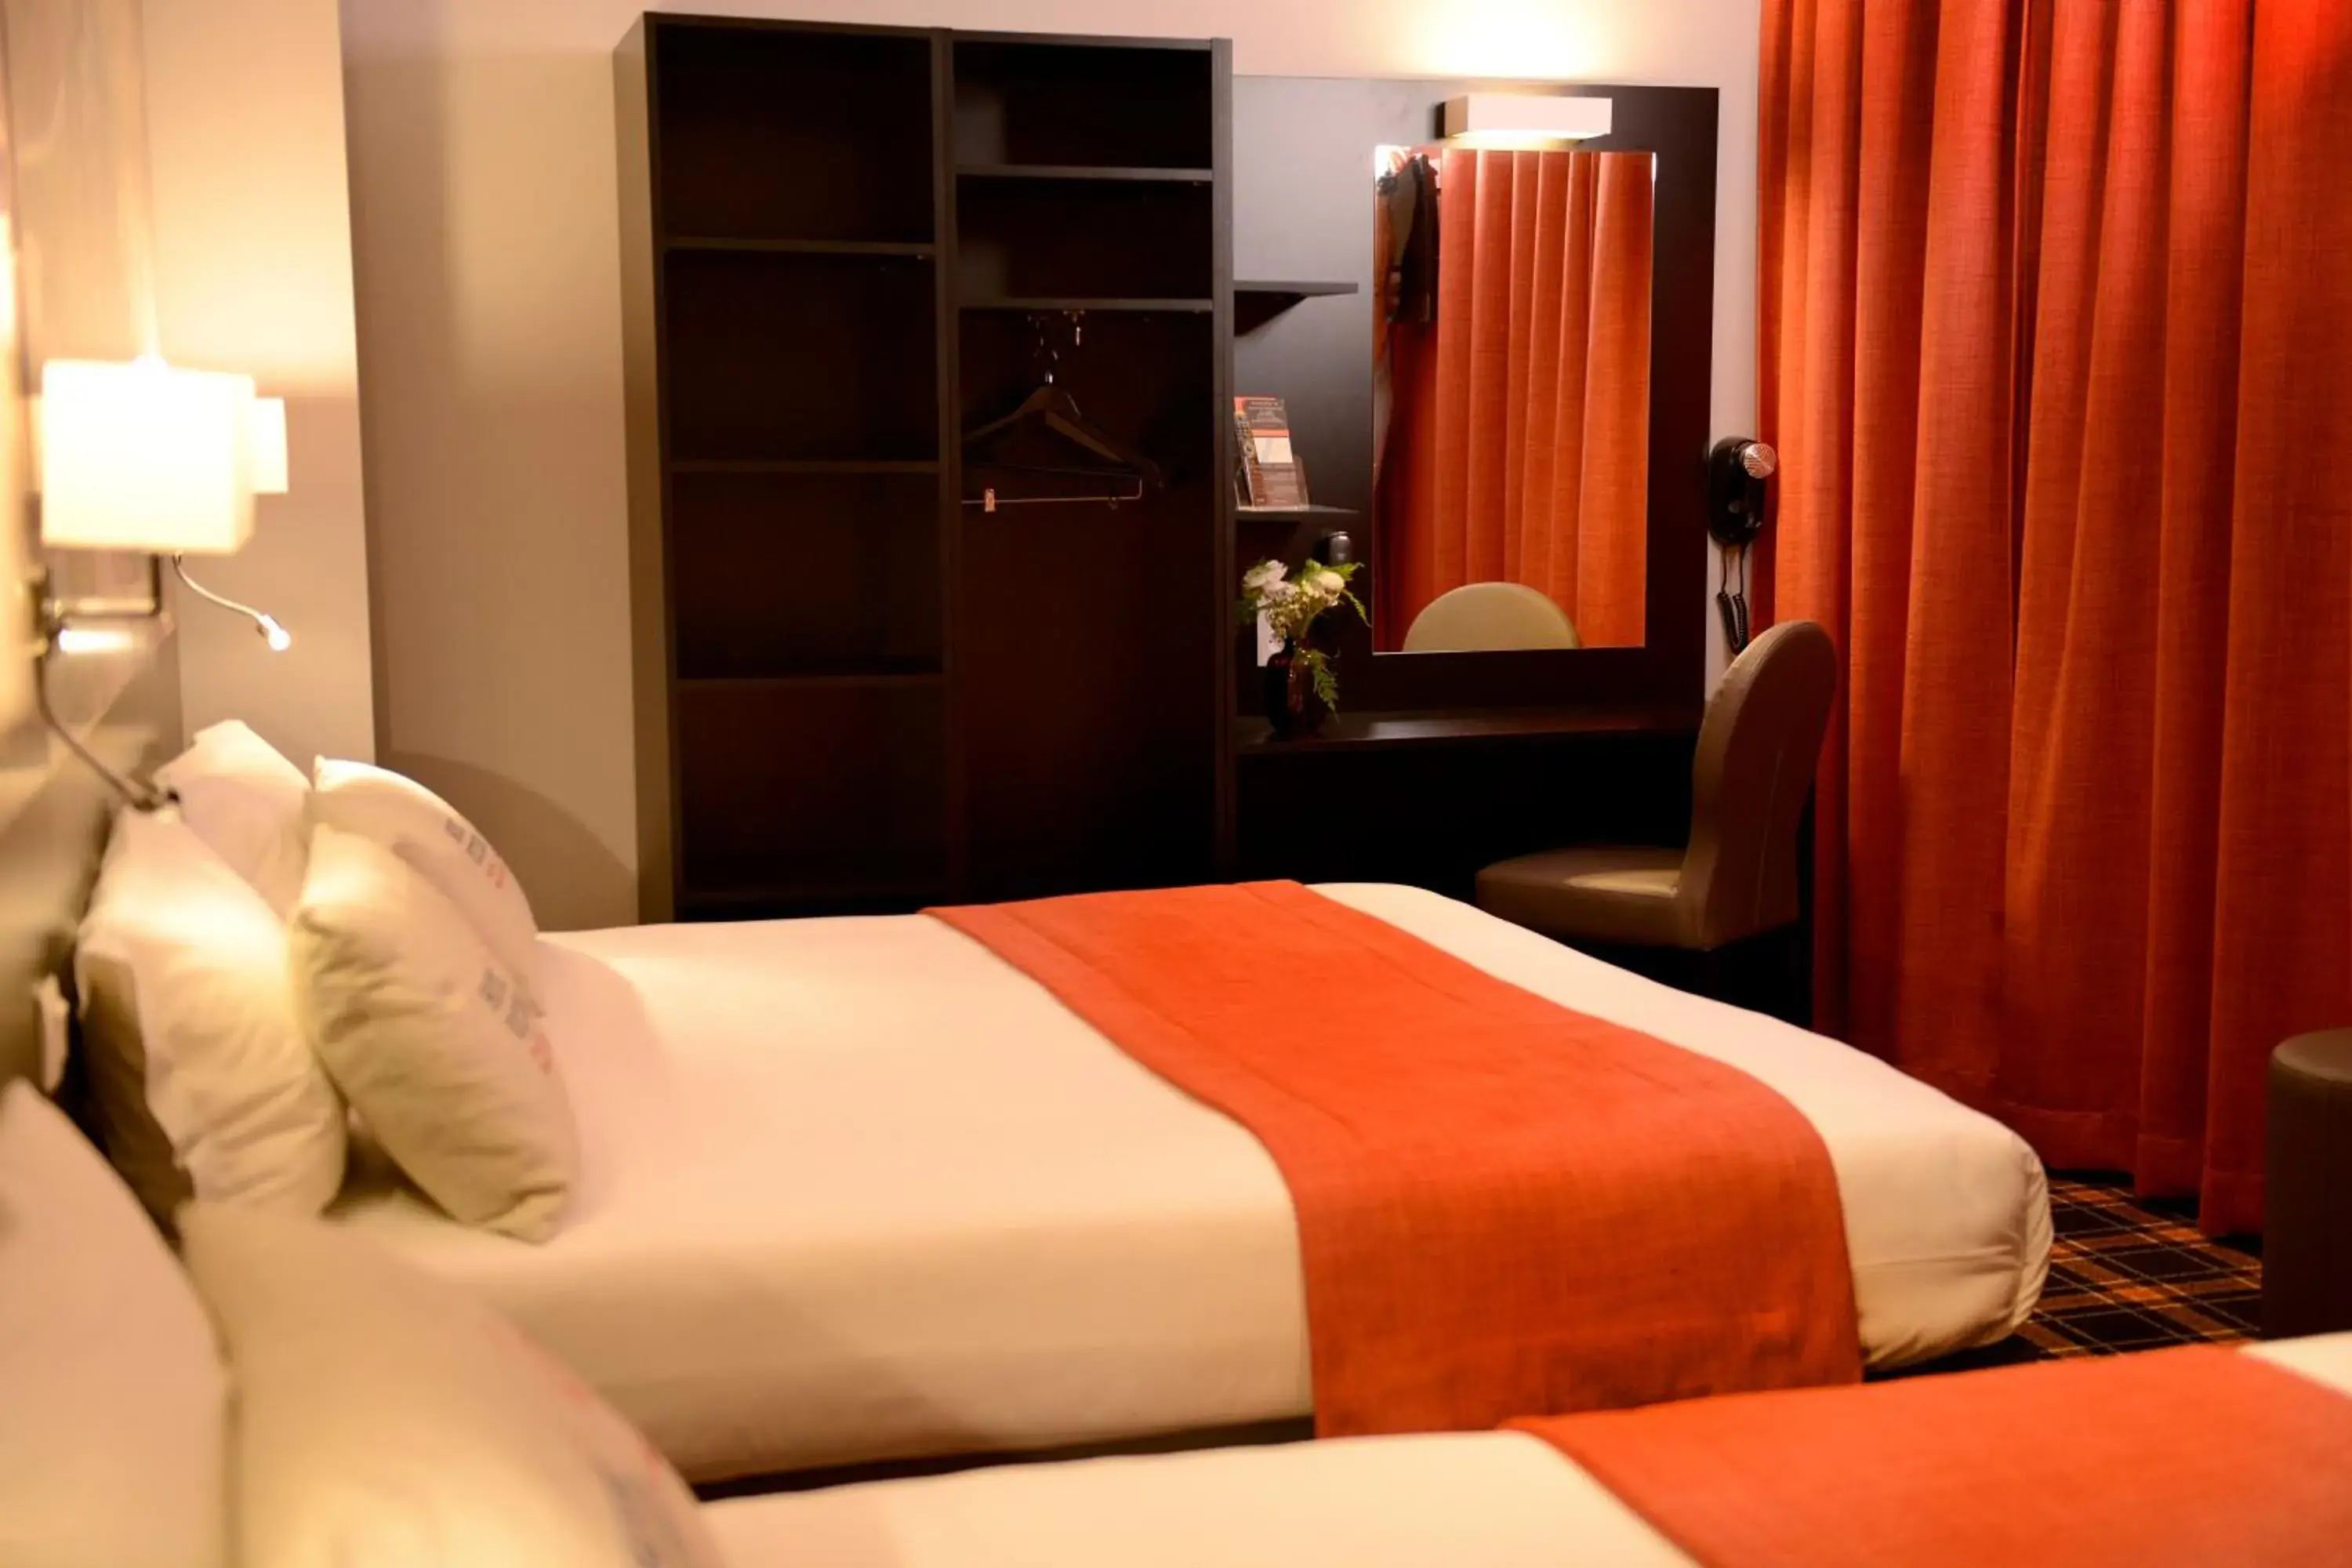 Bed in Hotel Victoria Lyon Perrache Confluence